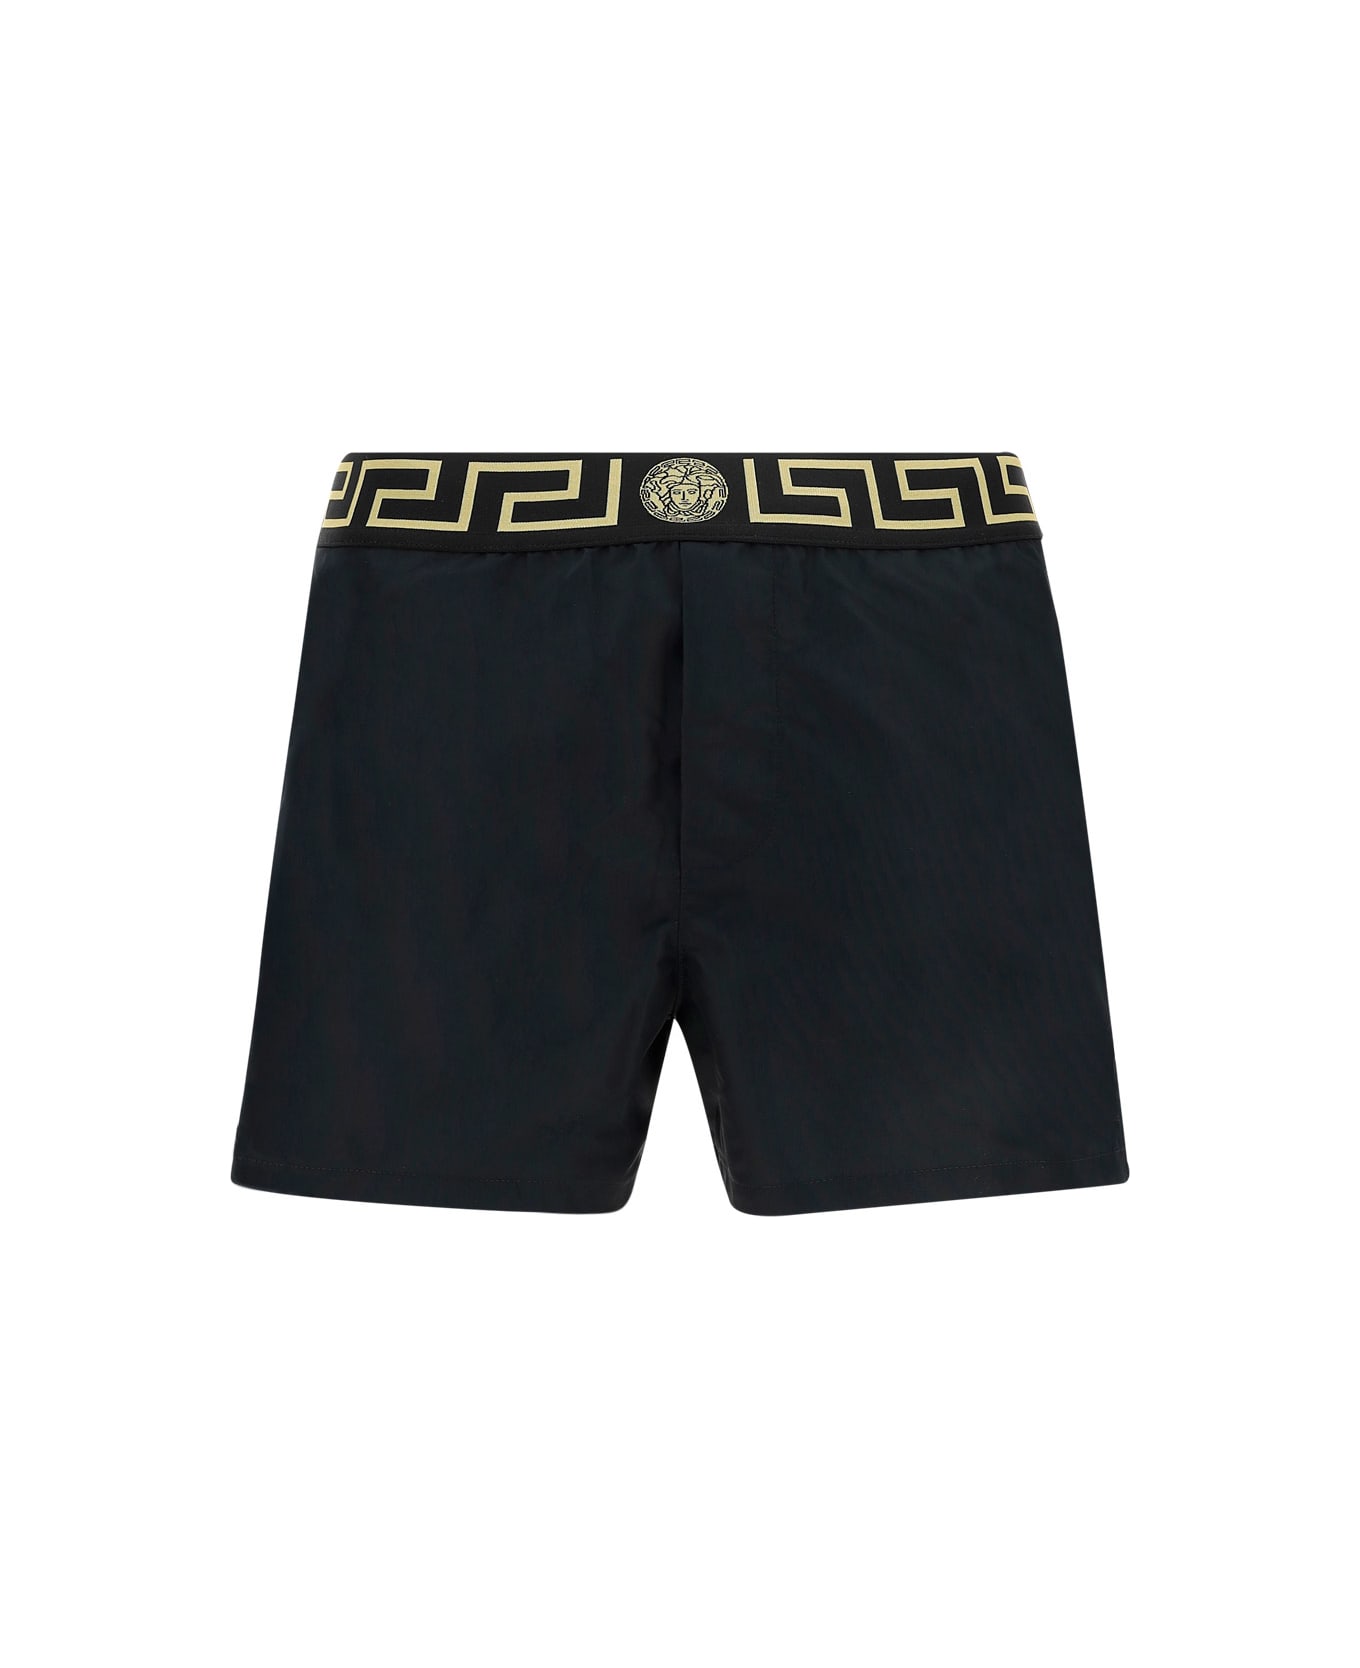 Versace Swimwear - G Black Gold Greek Key